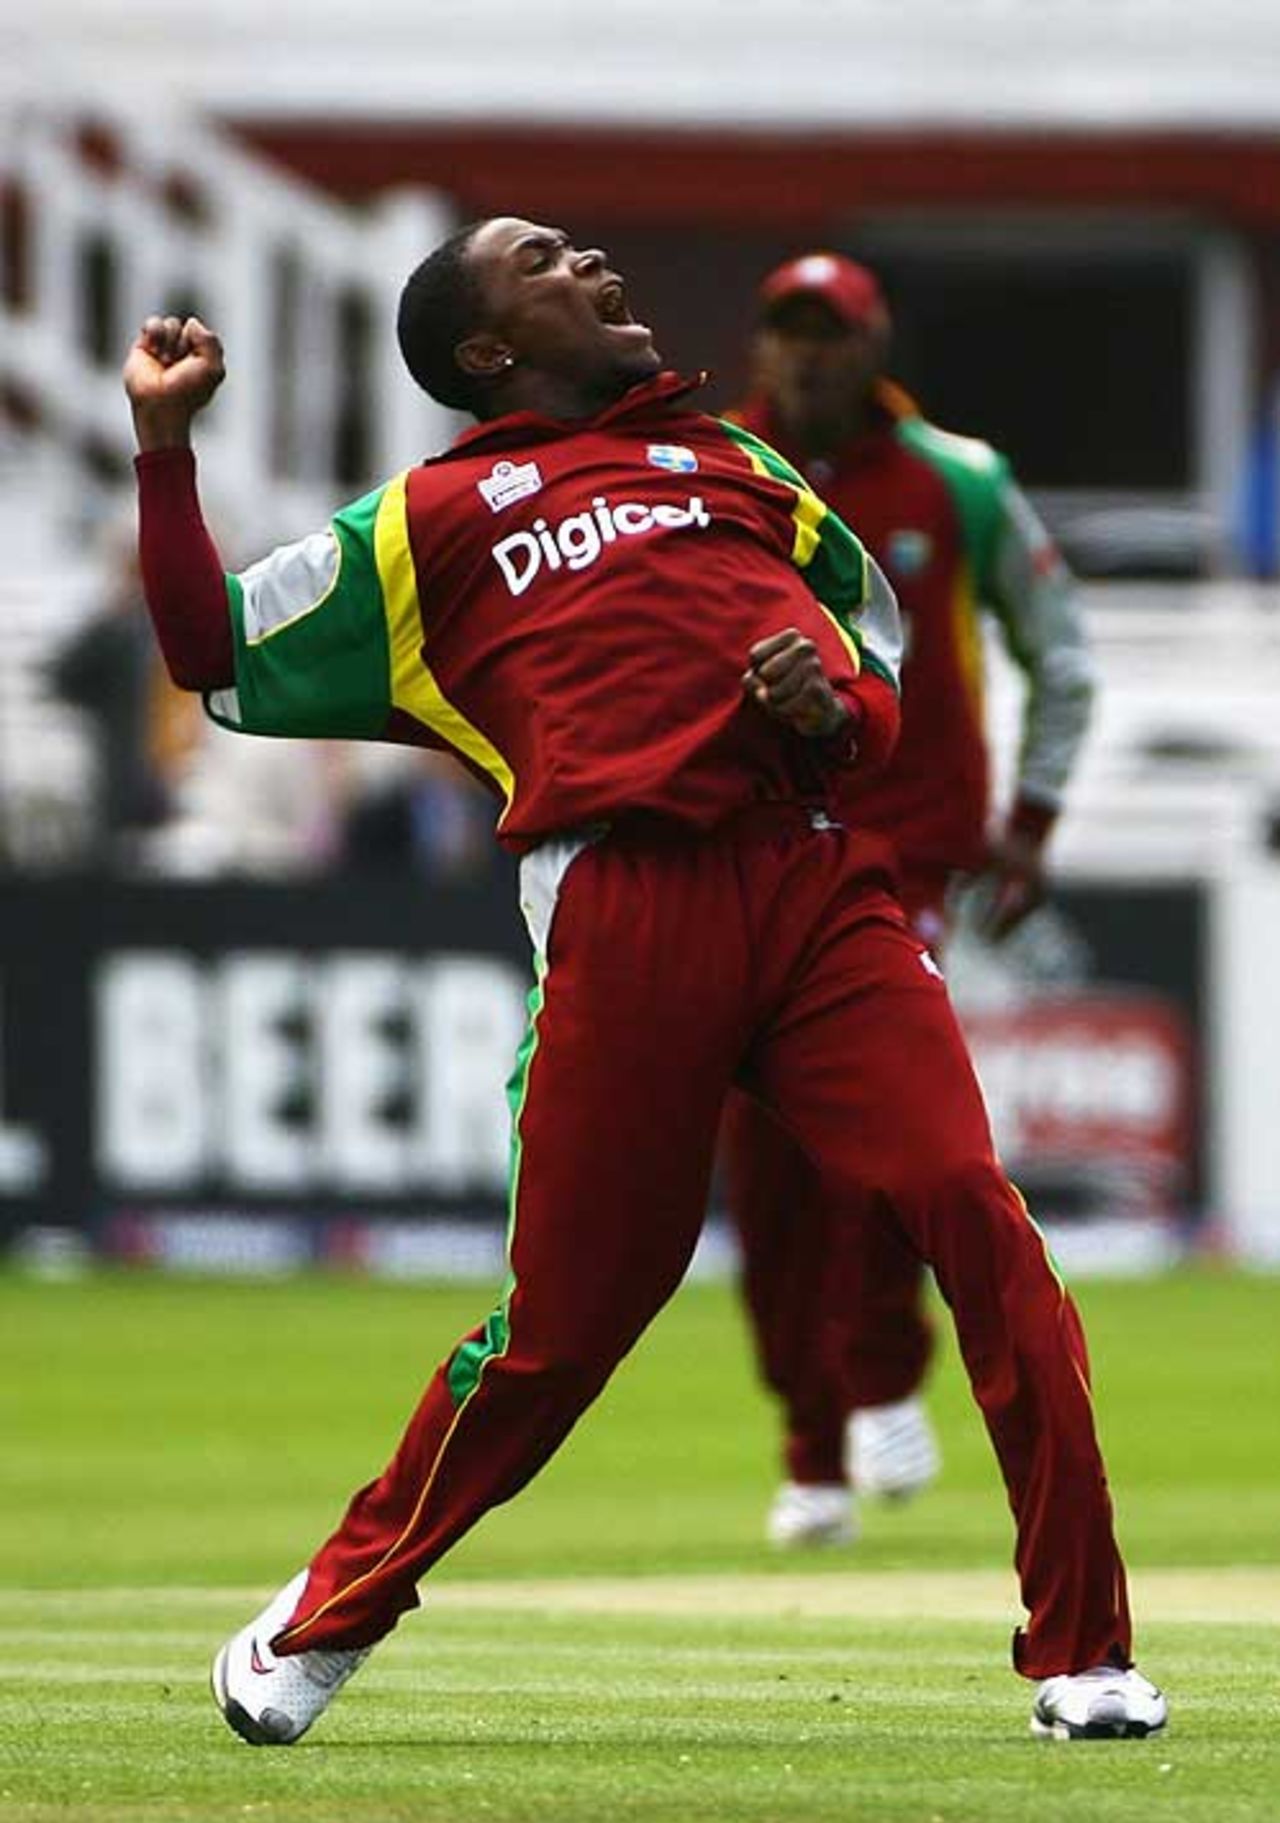 Fidel Edwards celebrates the dismissal of Paul Collingwood, England v West Indies, 1st ODI, Lord's, July 1, 2007